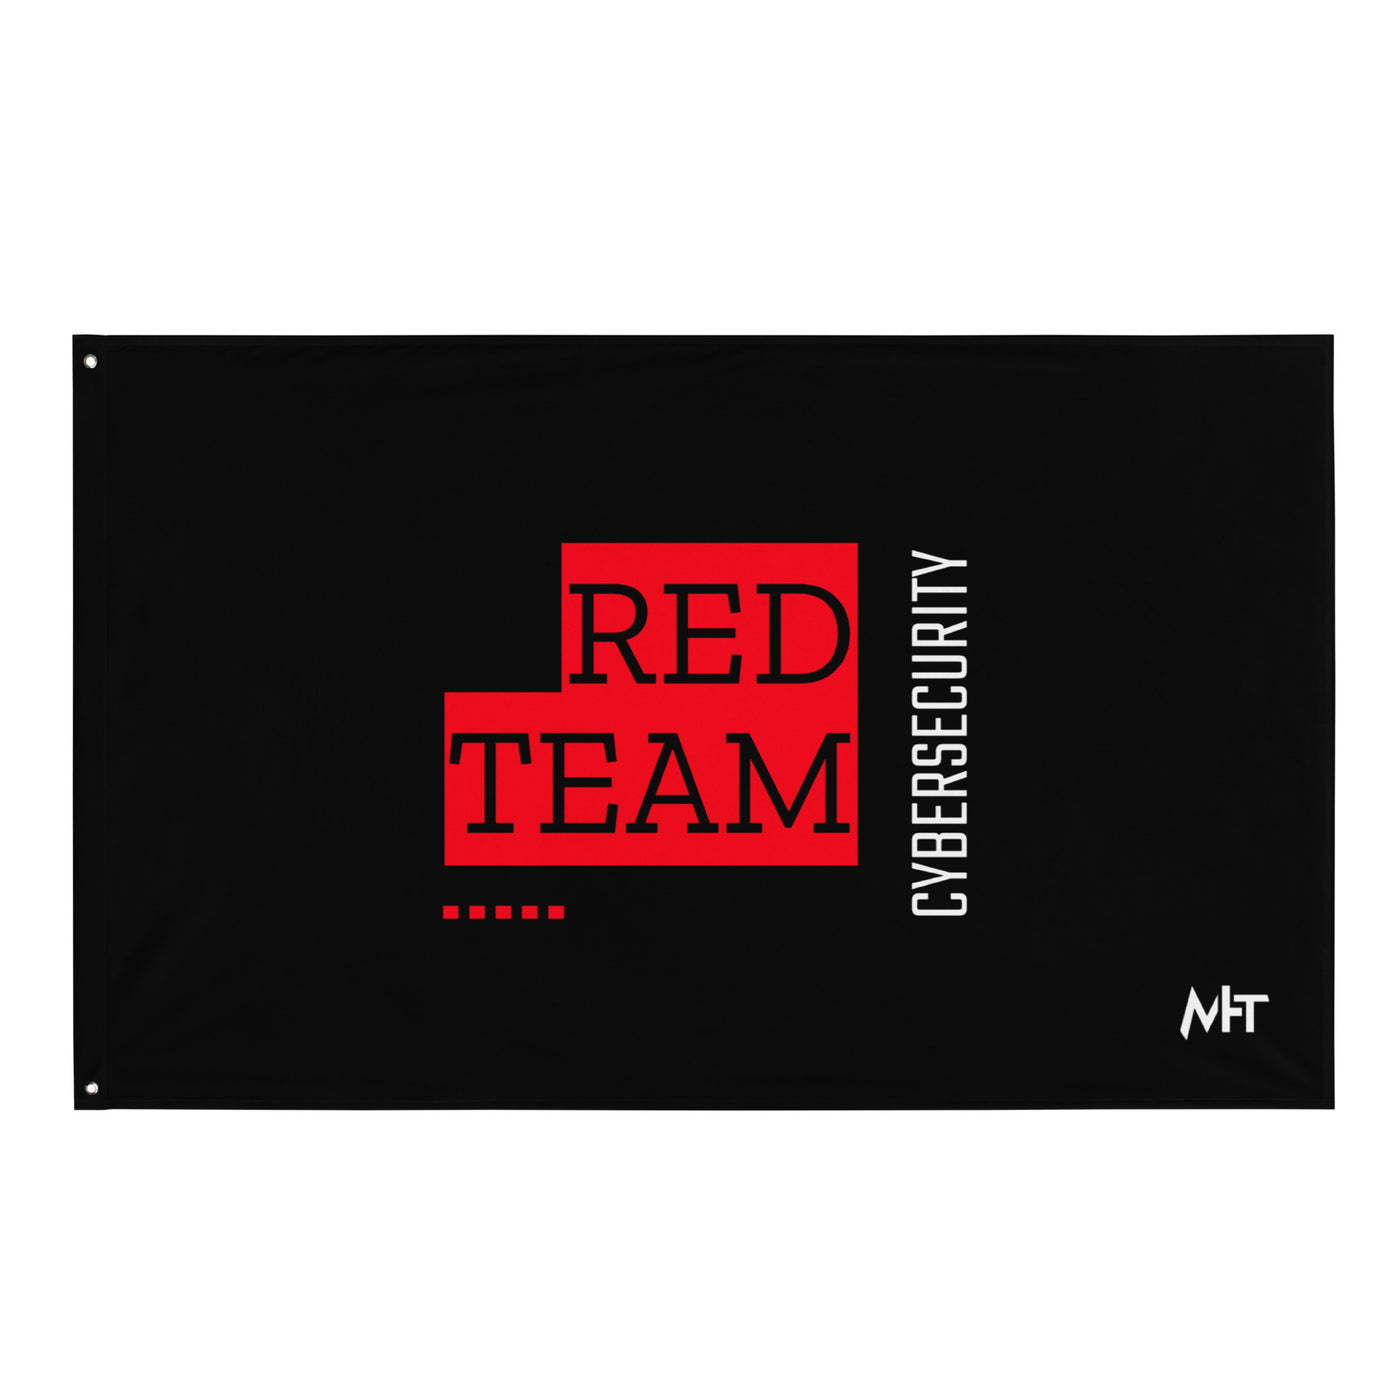 Cyber Security Red Team V13 - Flag